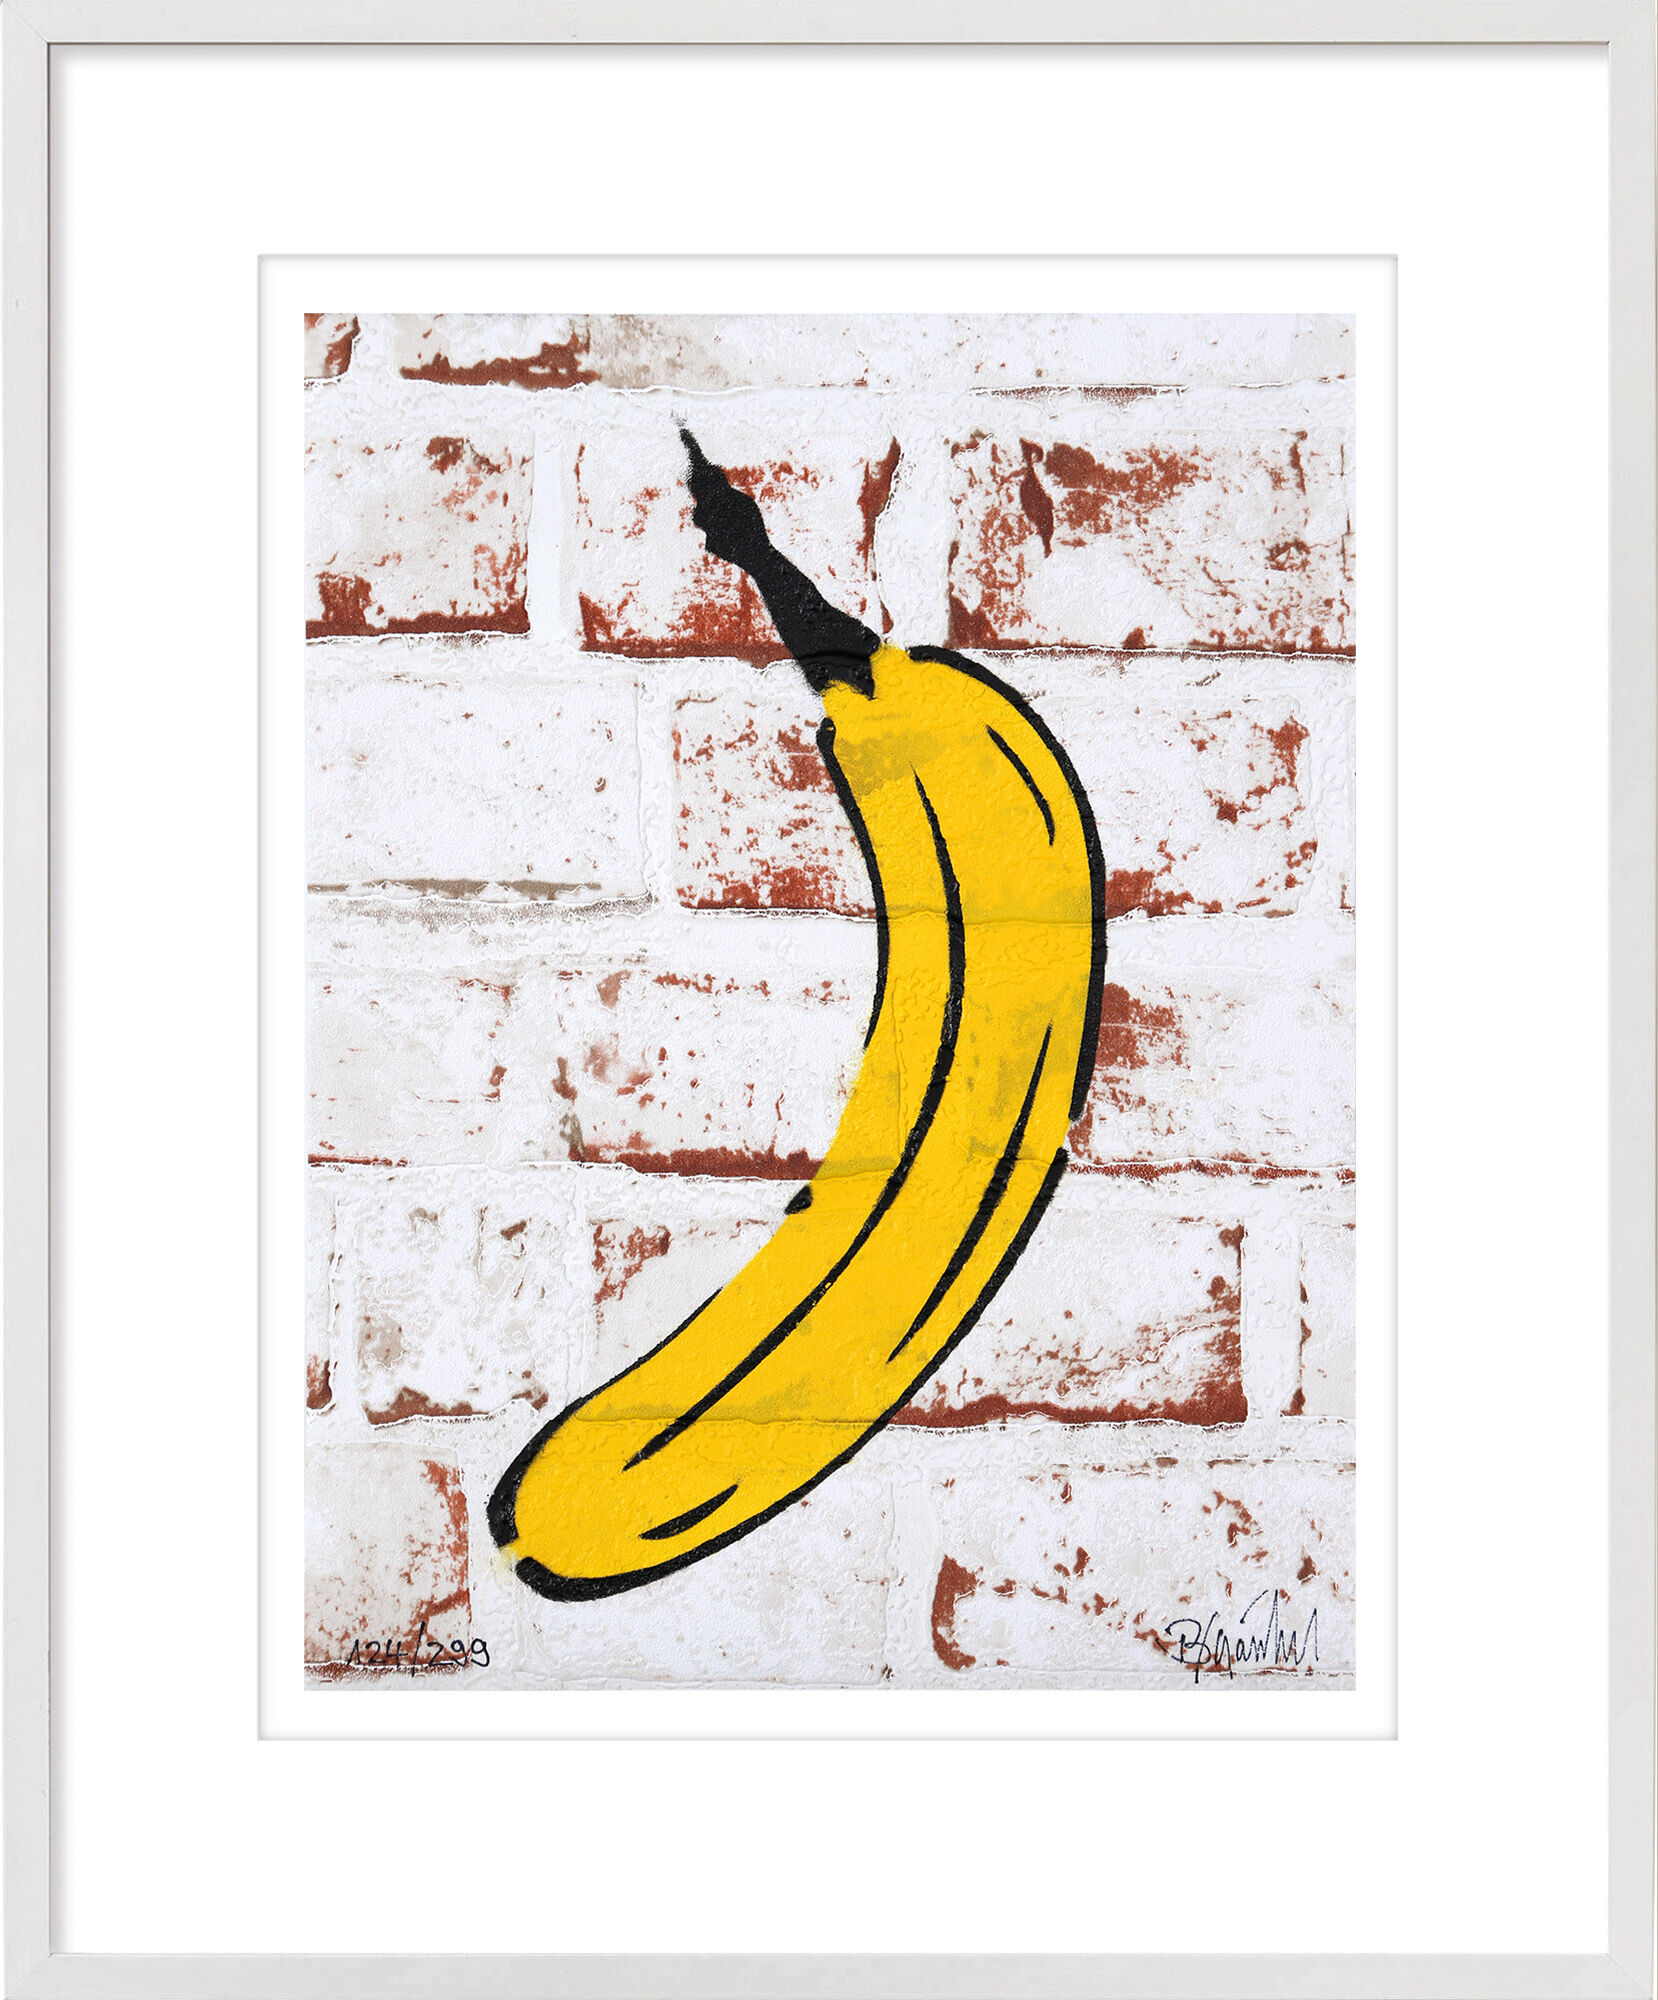 Billede "Wall Banana" (2019) von Thomas Baumgärtel